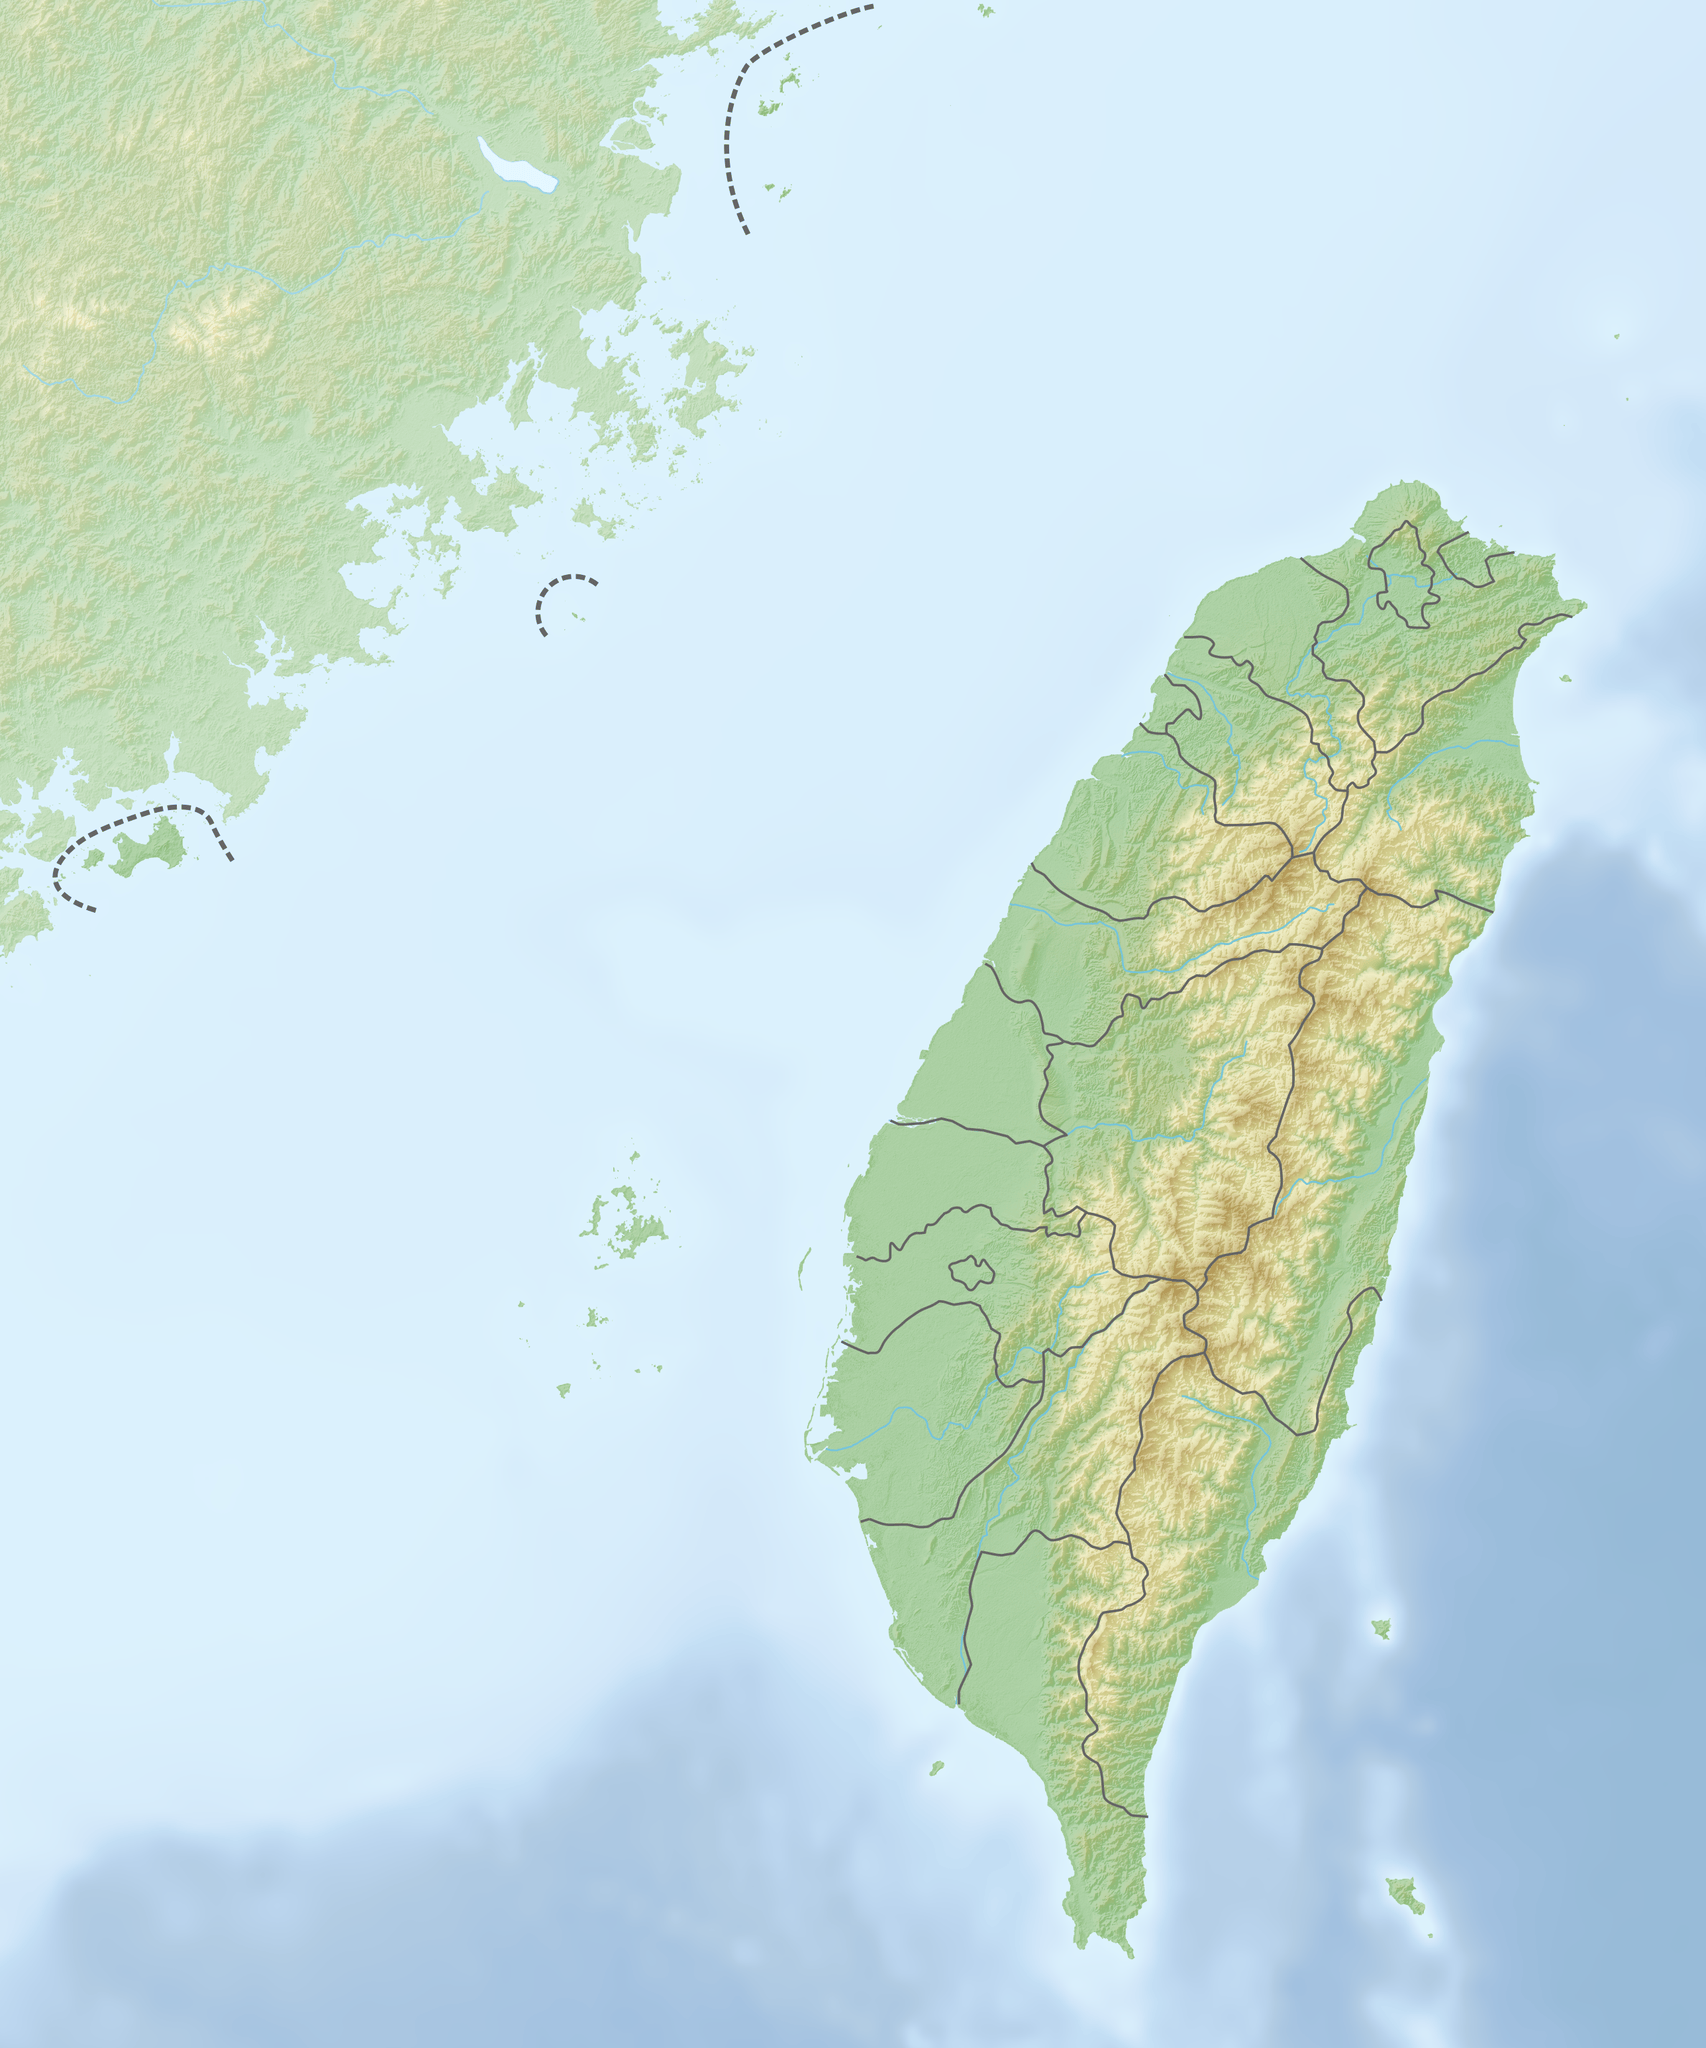 Reliefkarte Taiwan (Quelle Wikipedia)